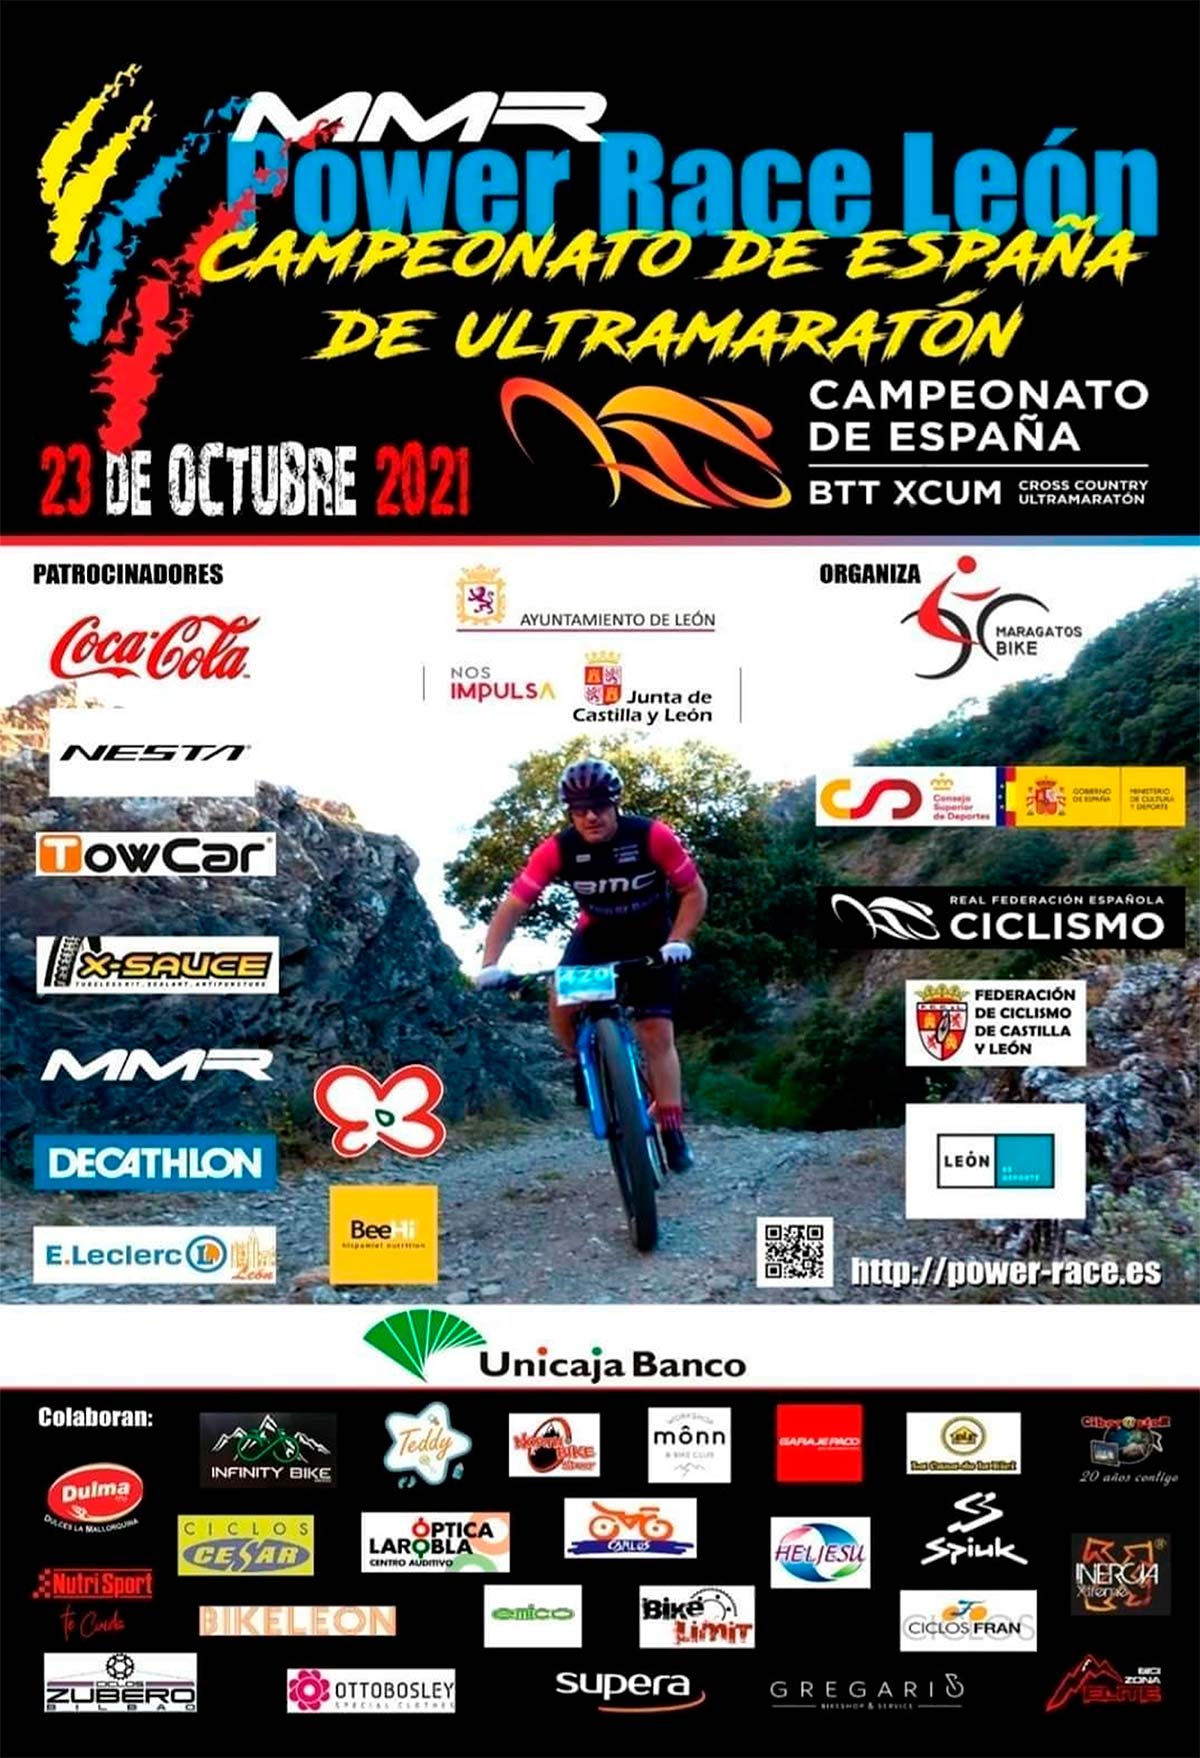 El Campeonato de España de XC Ultramaratón se decide este fin de semana en la Power Race Léon